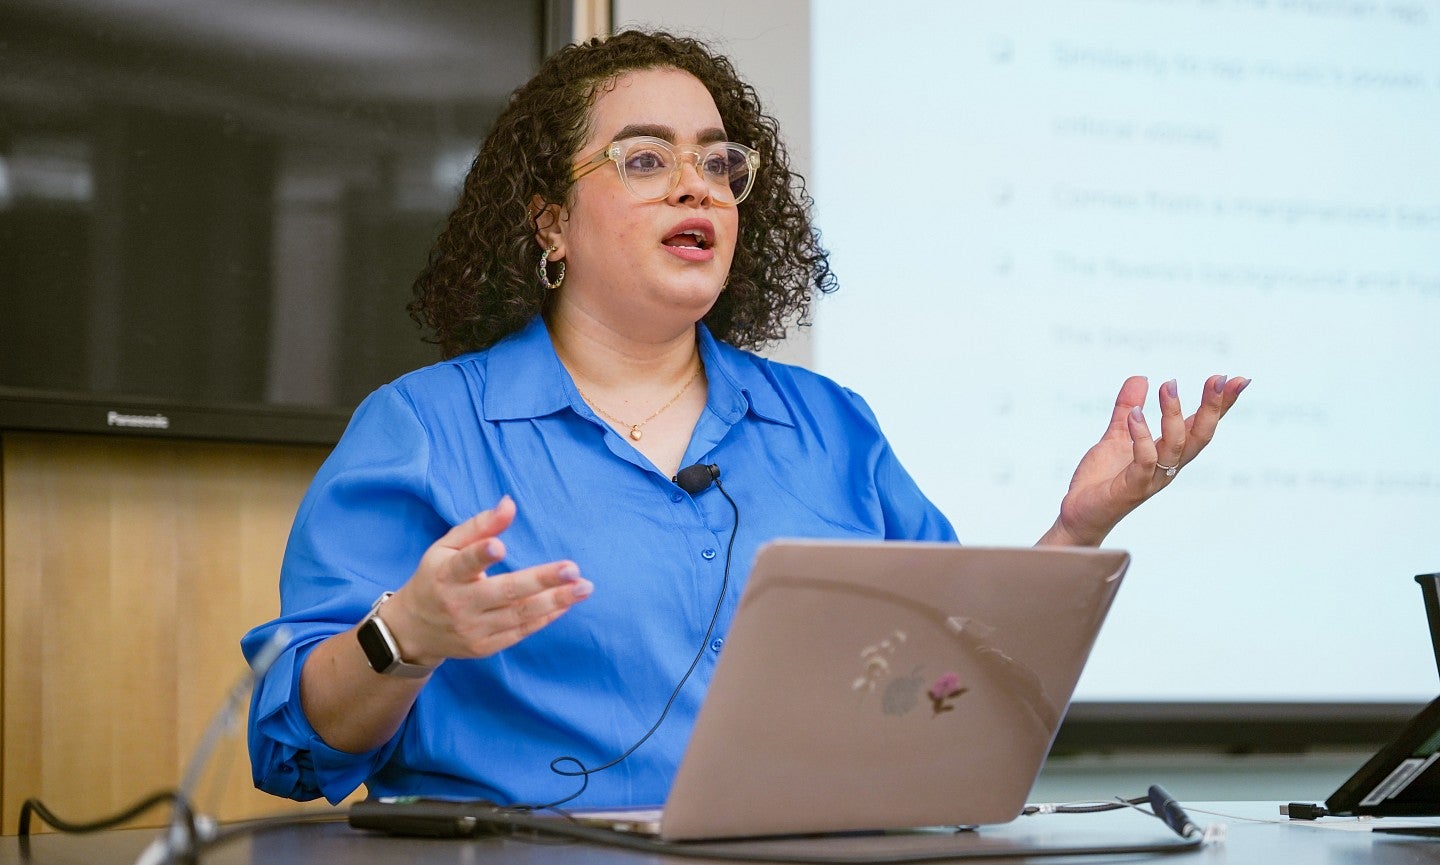 An SOJC PhD student teaches a class